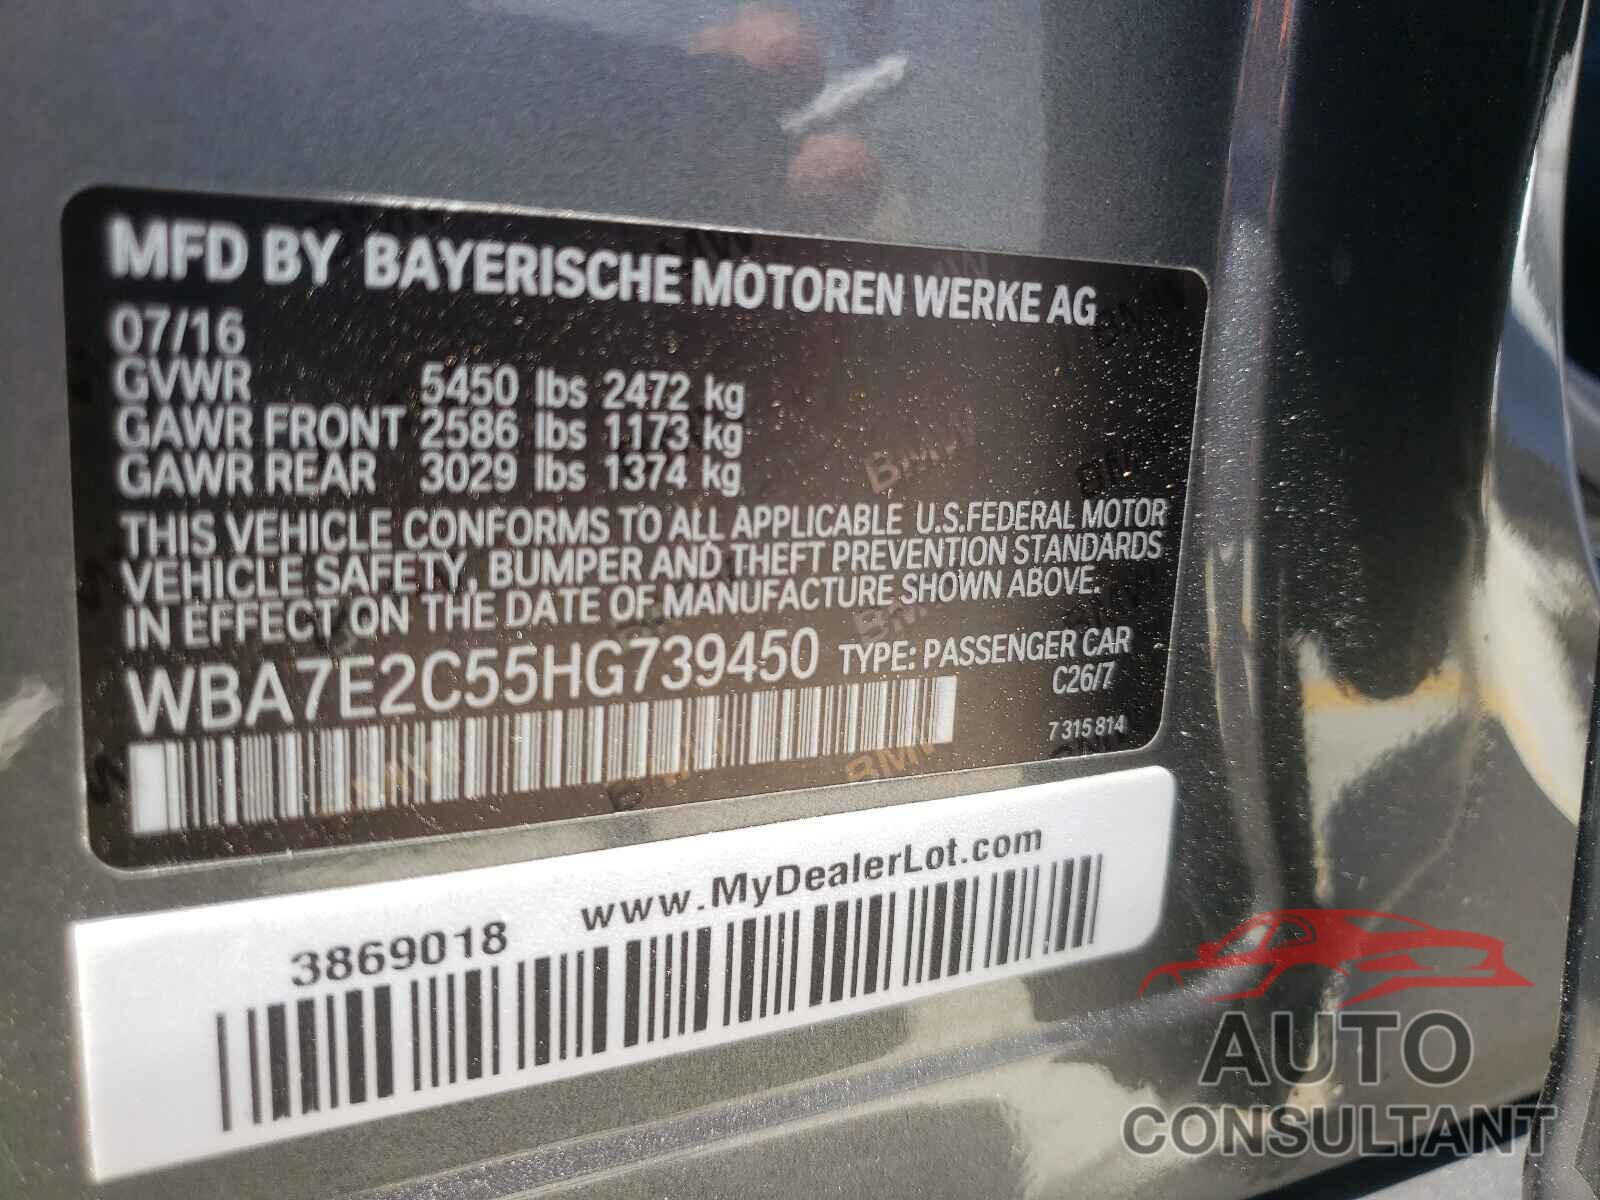 BMW 7 SERIES 2017 - WBA7E2C55HG739450